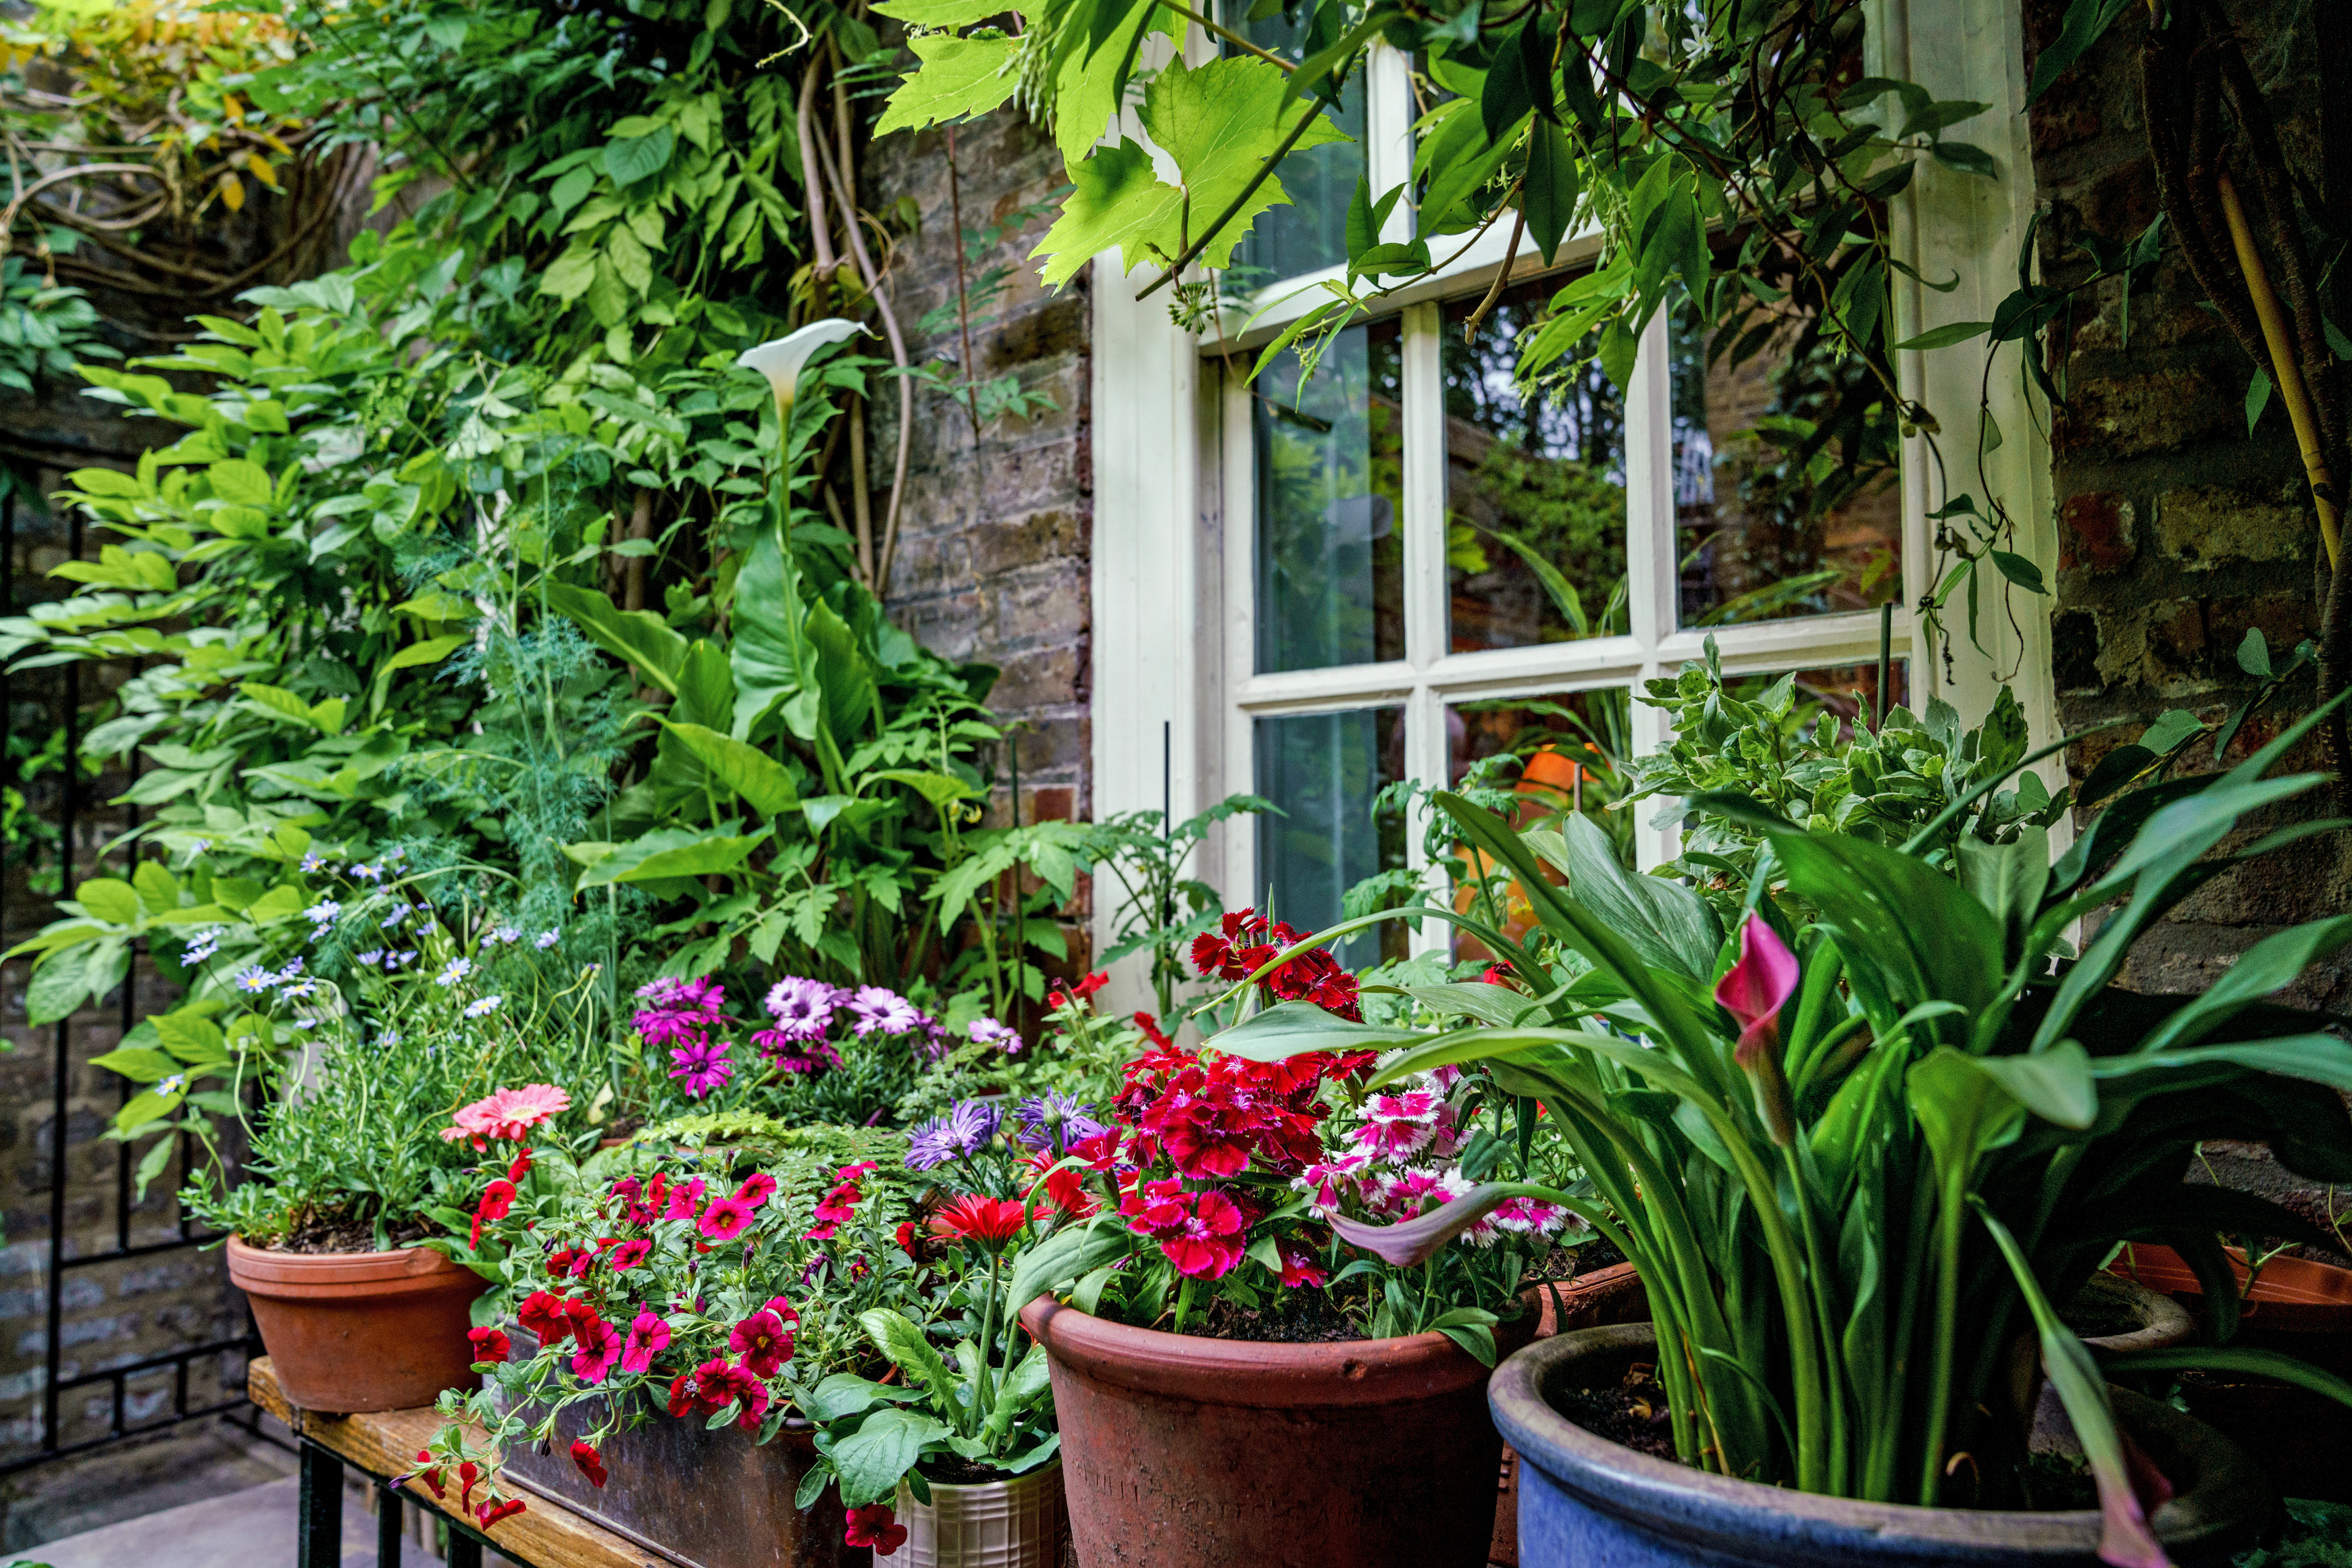 Colourful pots fringe a window at a courtyard garden in Spitalfields Gardens (Julie Skelton/PA)